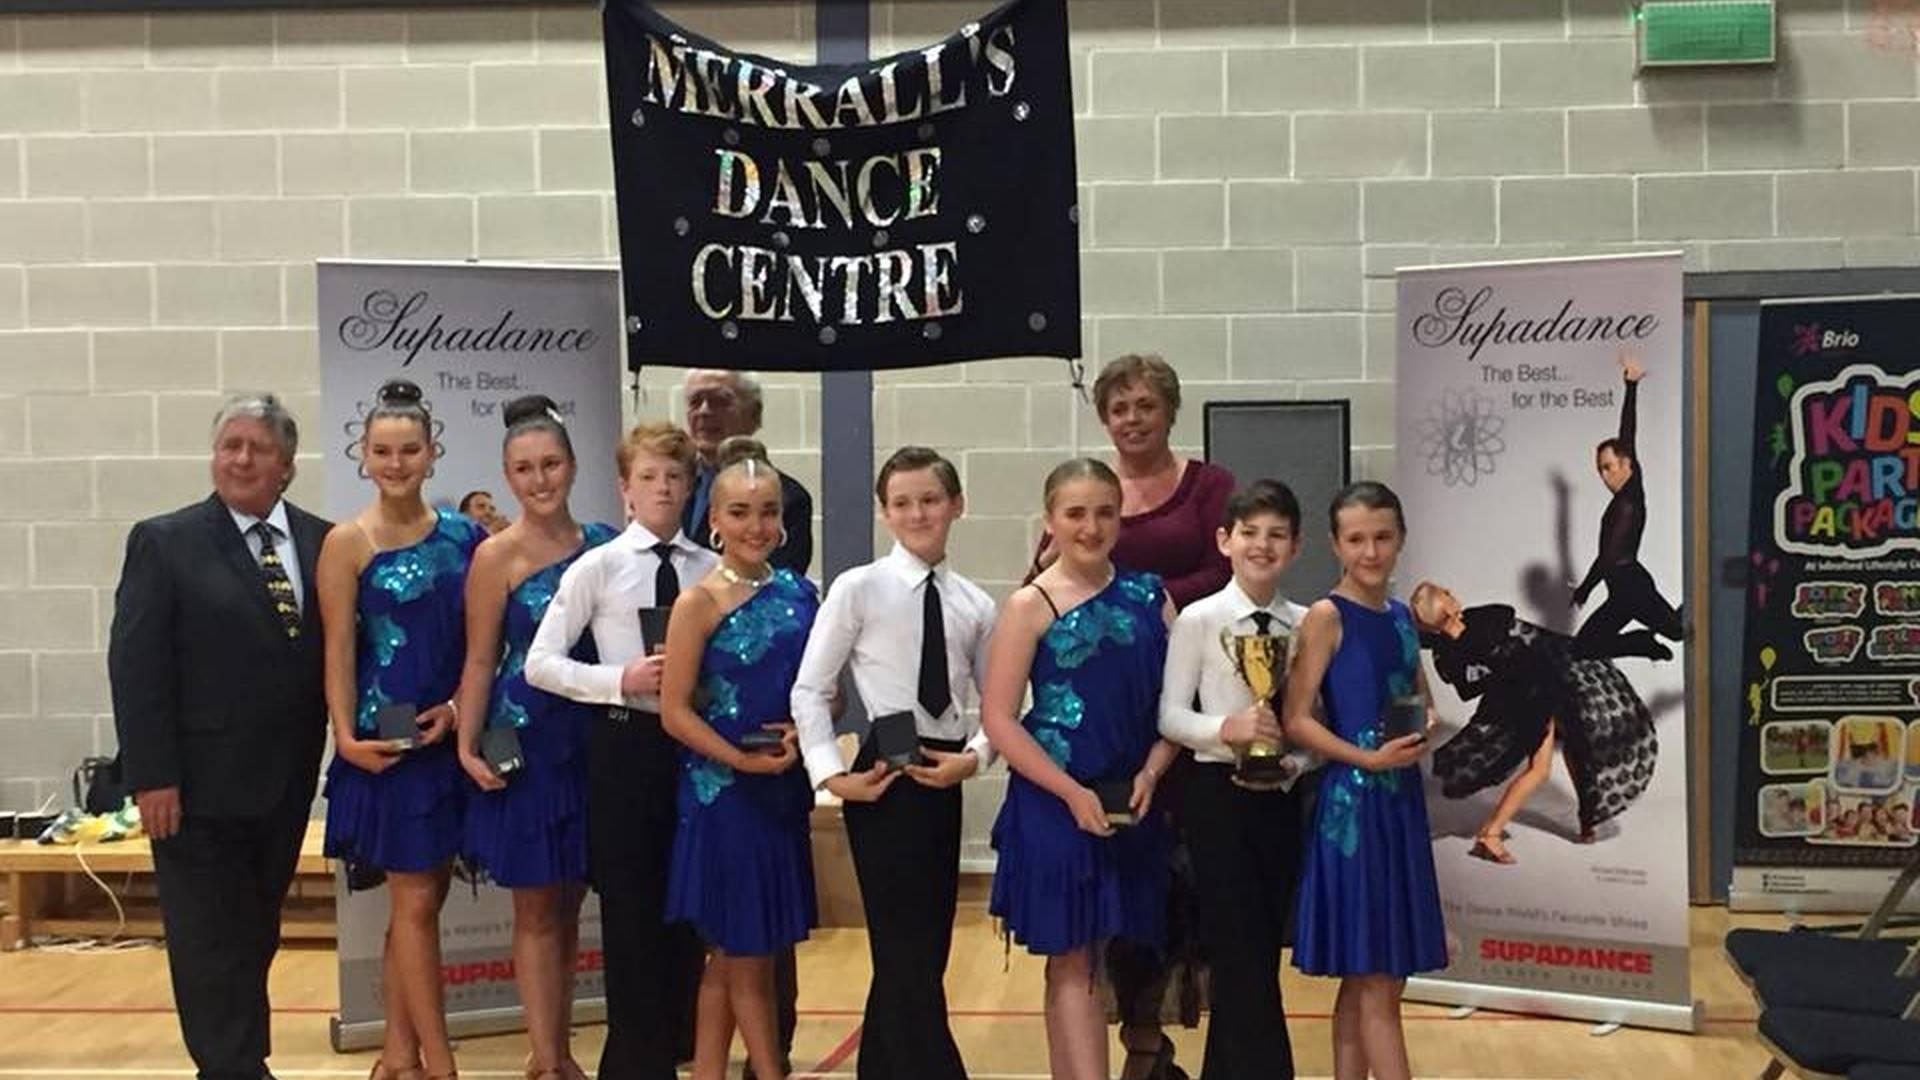 Merralls Dance Centre photo